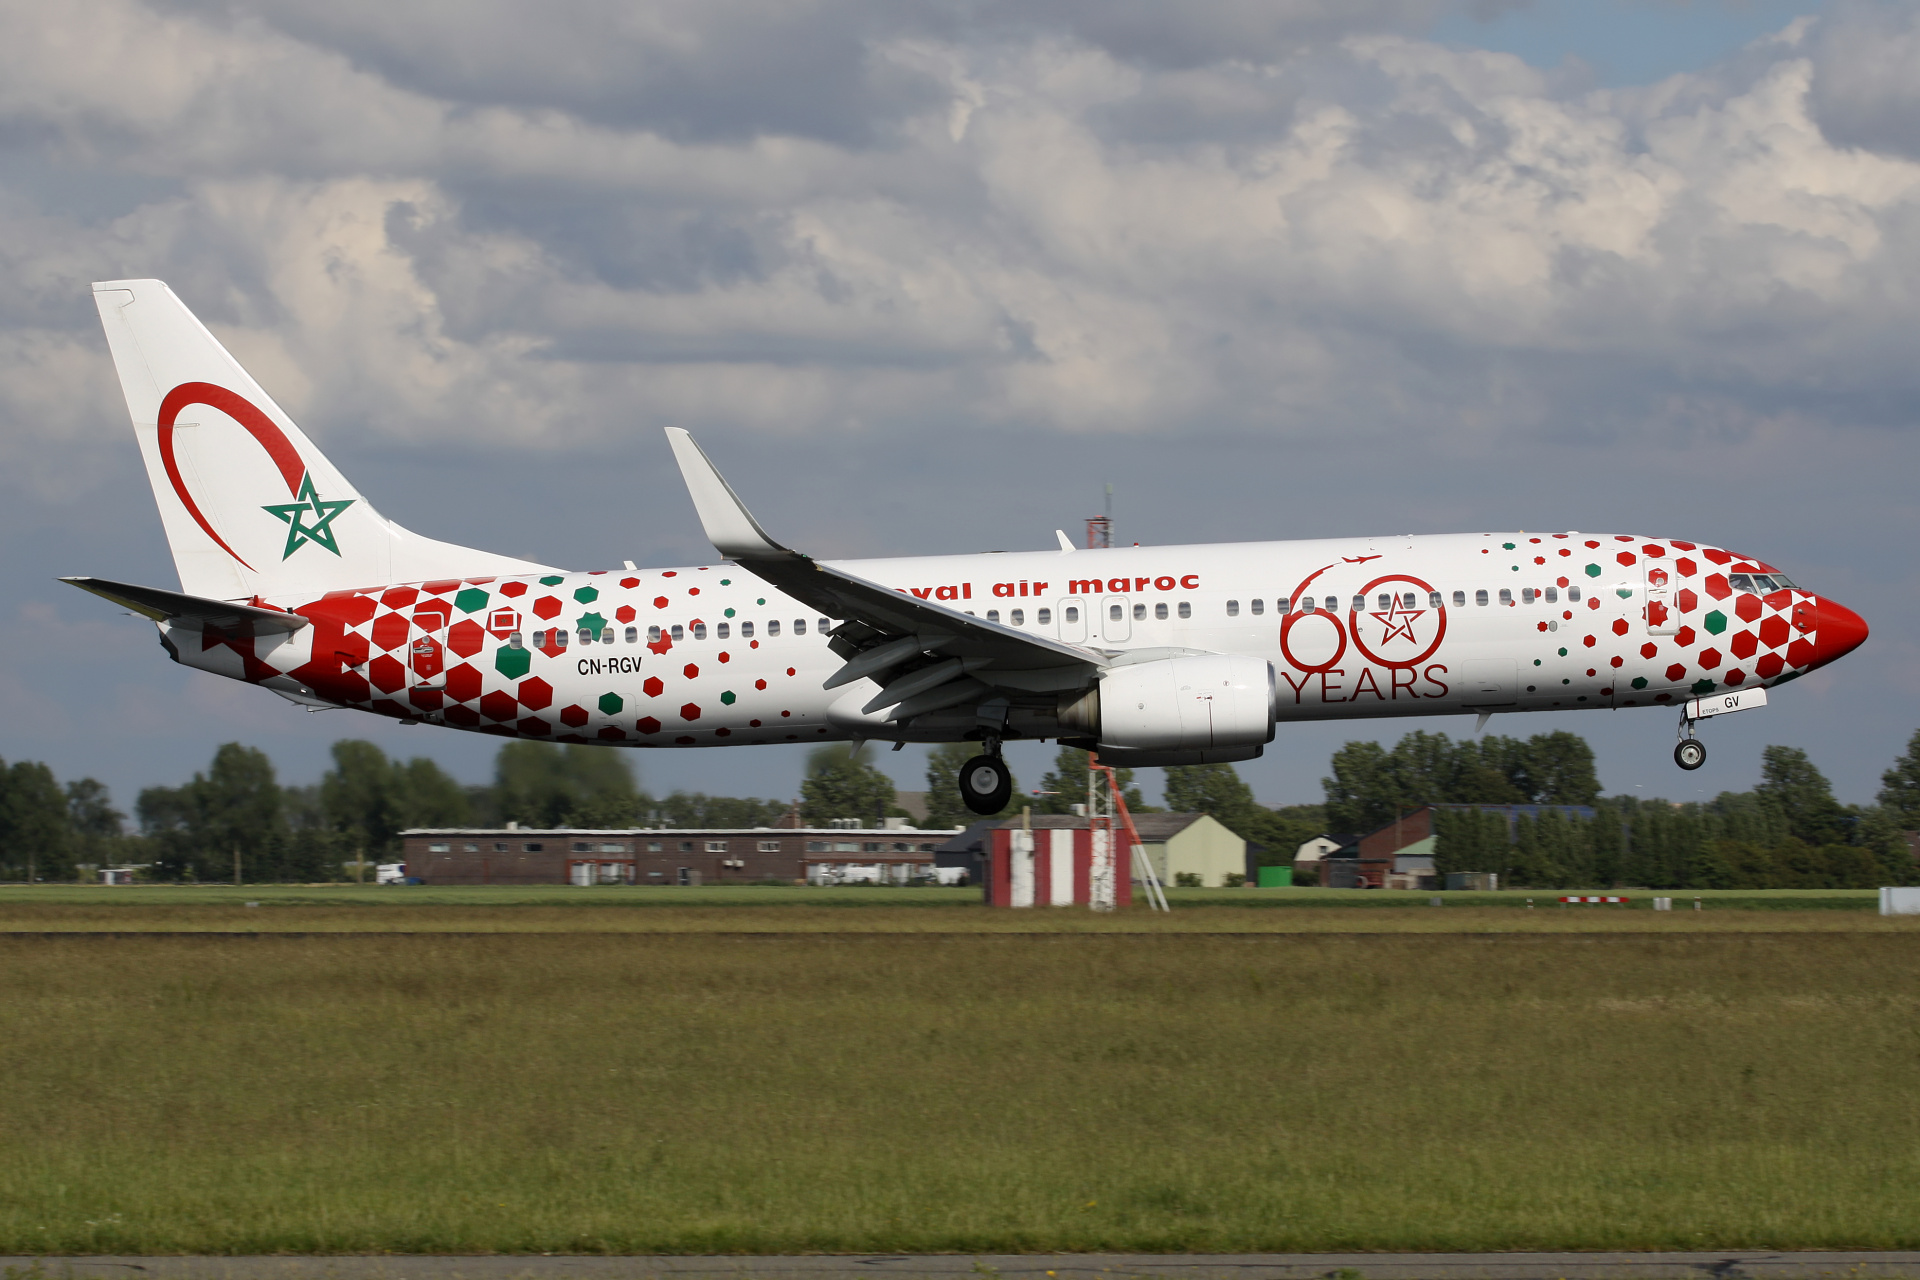 CN-RGV, Royal Air Maroc (60 years livery) (Aircraft » Schiphol Spotting » Boeing 737-800)